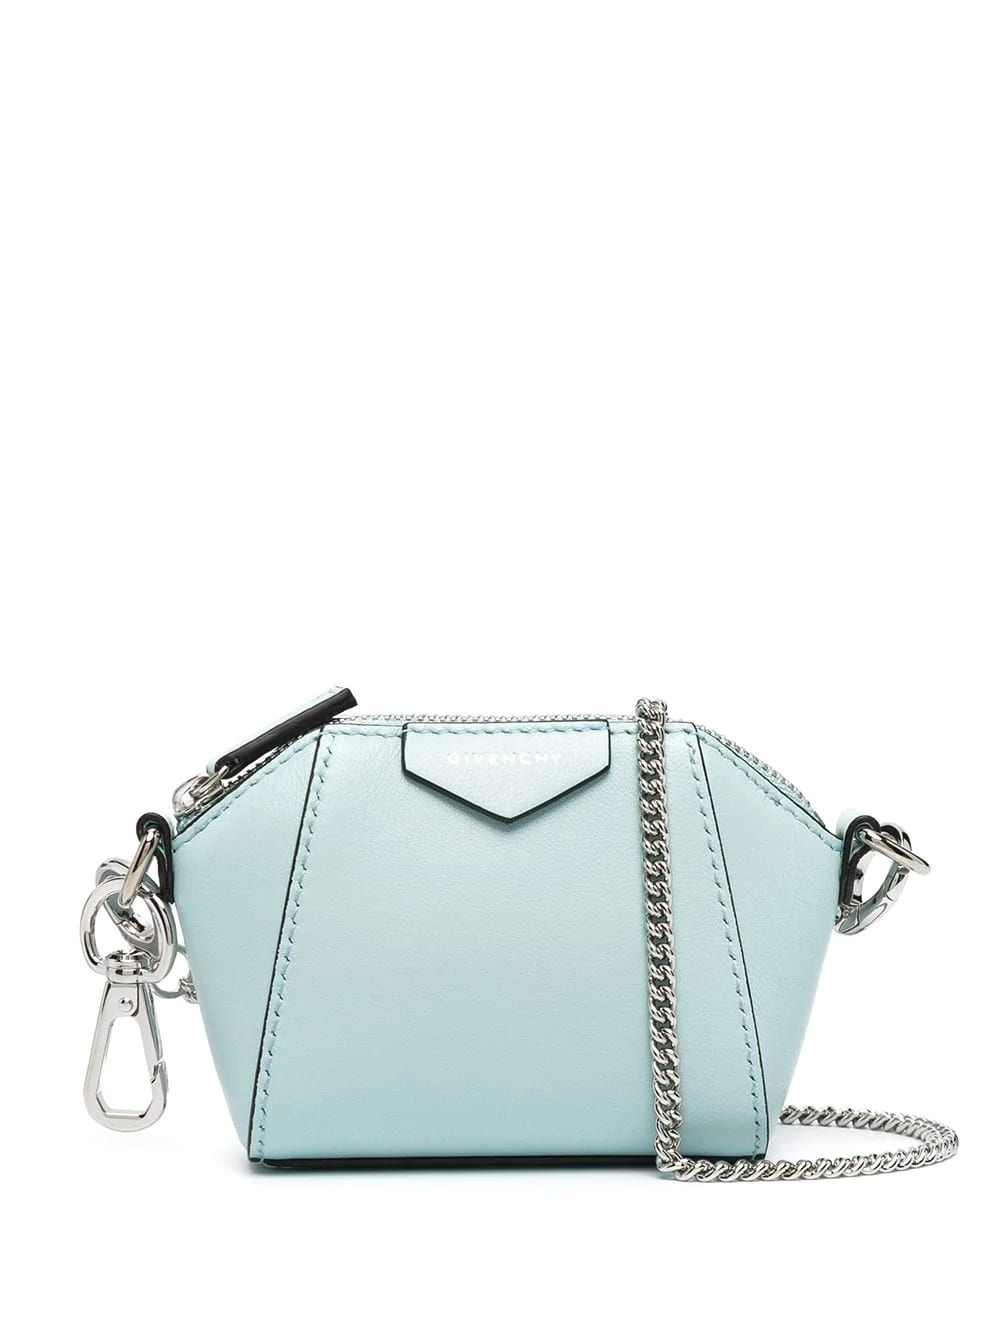 Givenchy Light Blue Baby Antigona Bag With Chain